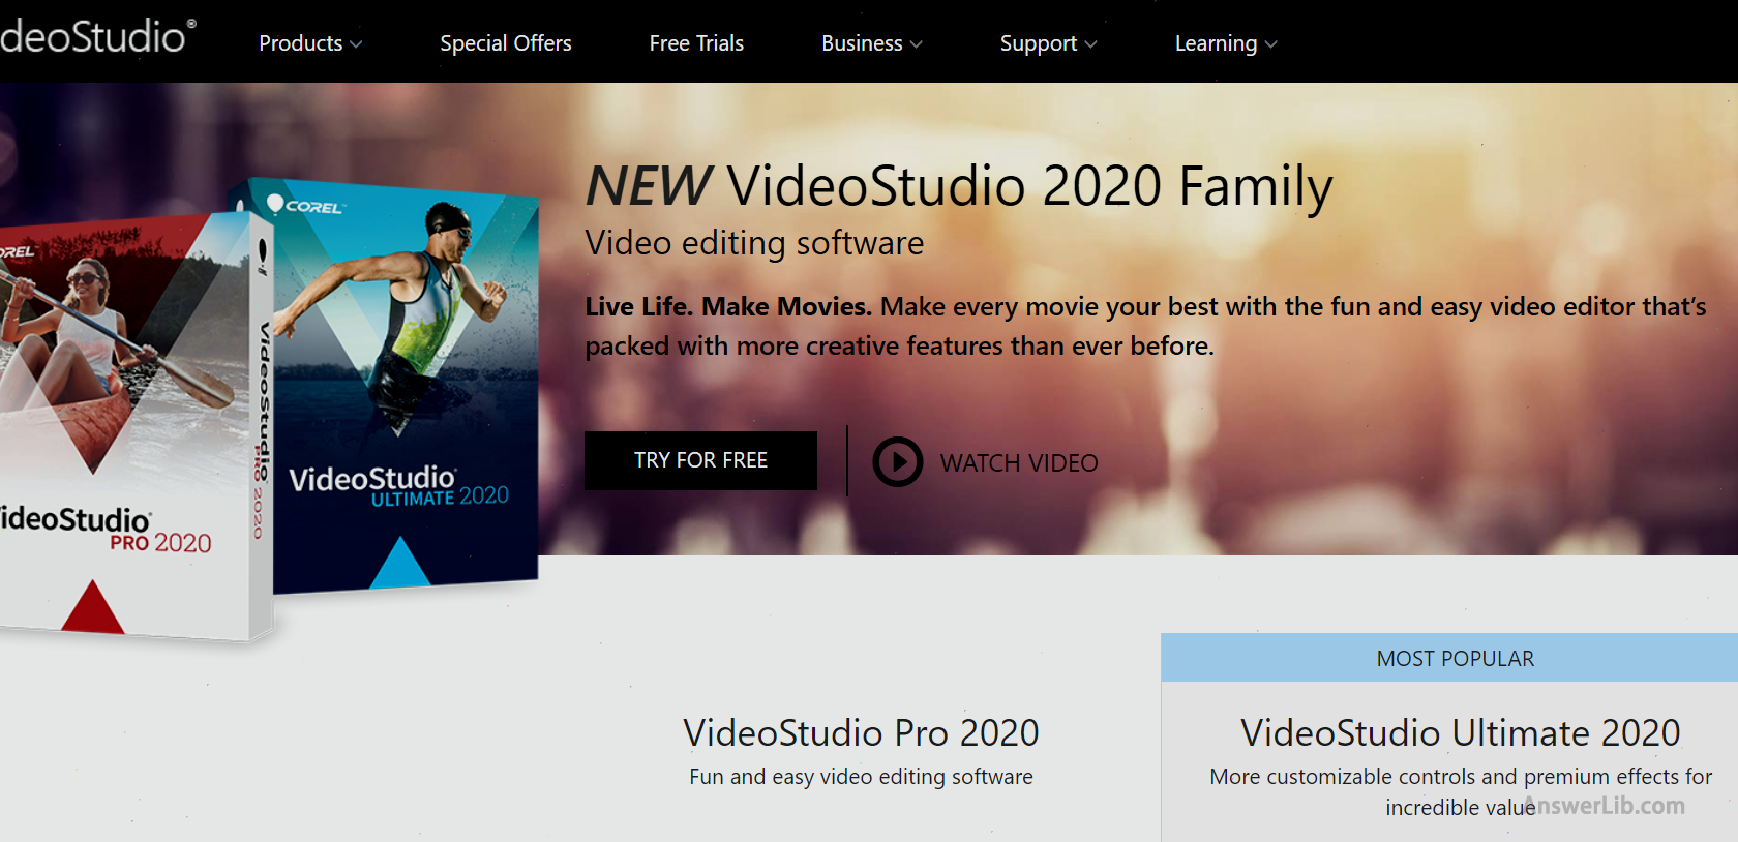 Video editing software suitable for beginners: Corel VideoStudio Ultimate